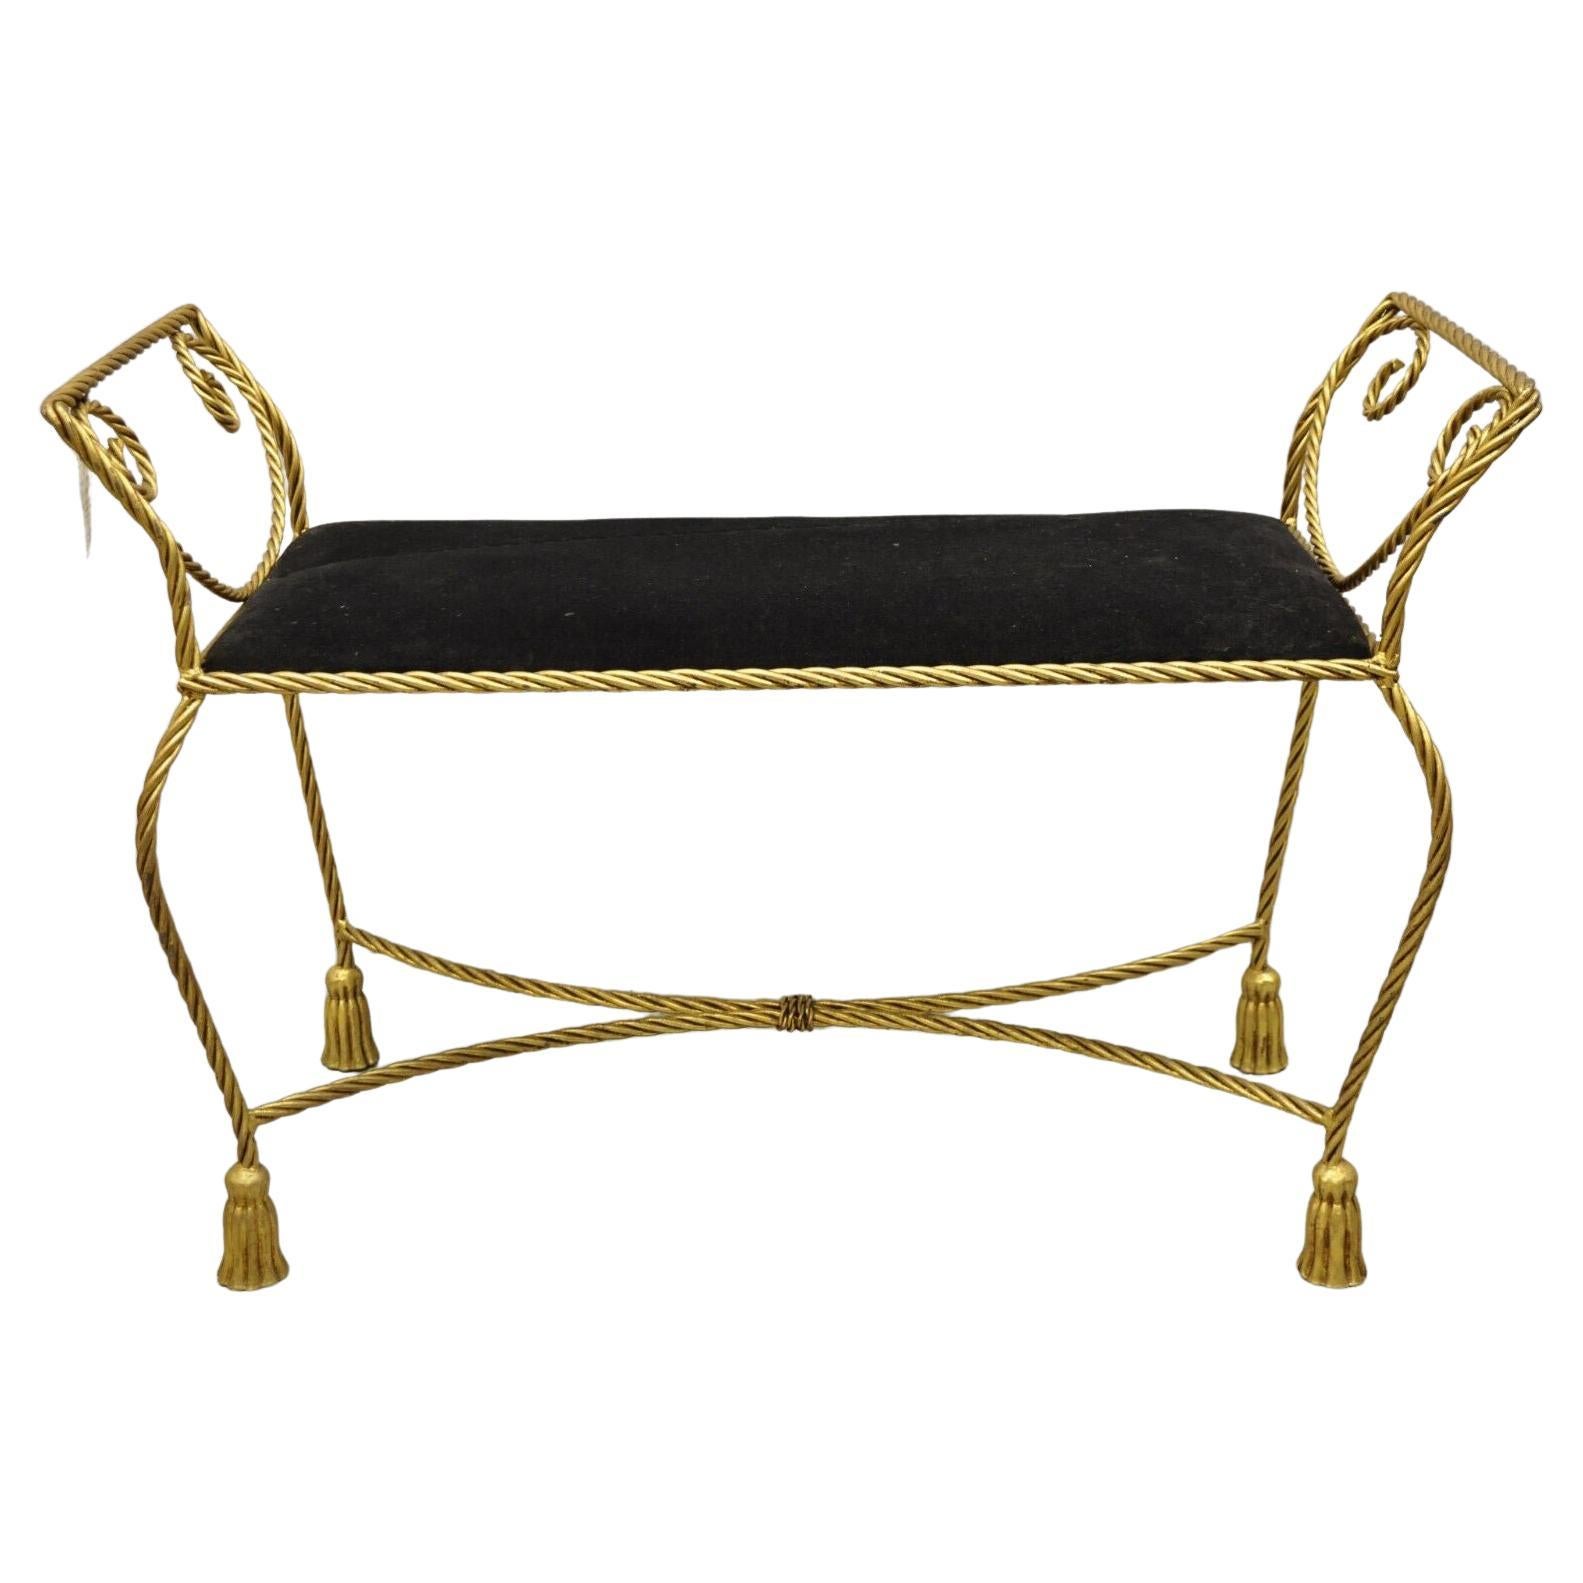 Vtg Italian Hollywood Regency Iron Rope & Tassel Gold Gilt Leaf Bench Black Seat